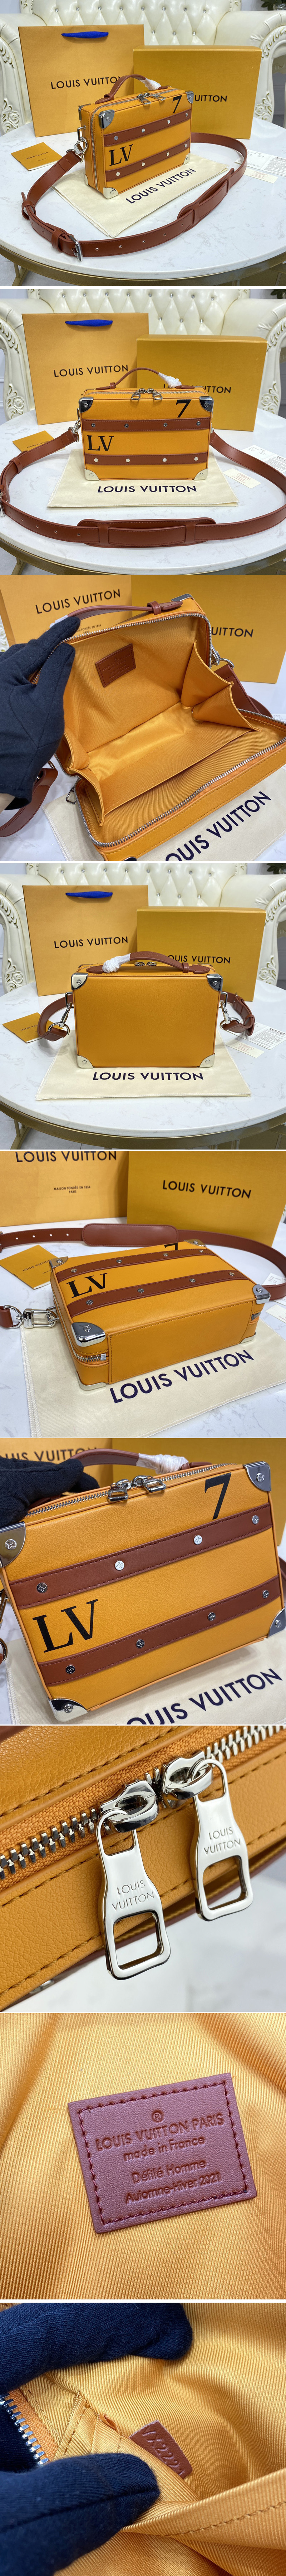 Replica Louis Vuitton Multiple Wallet In Monogram Shadow Leather M80422